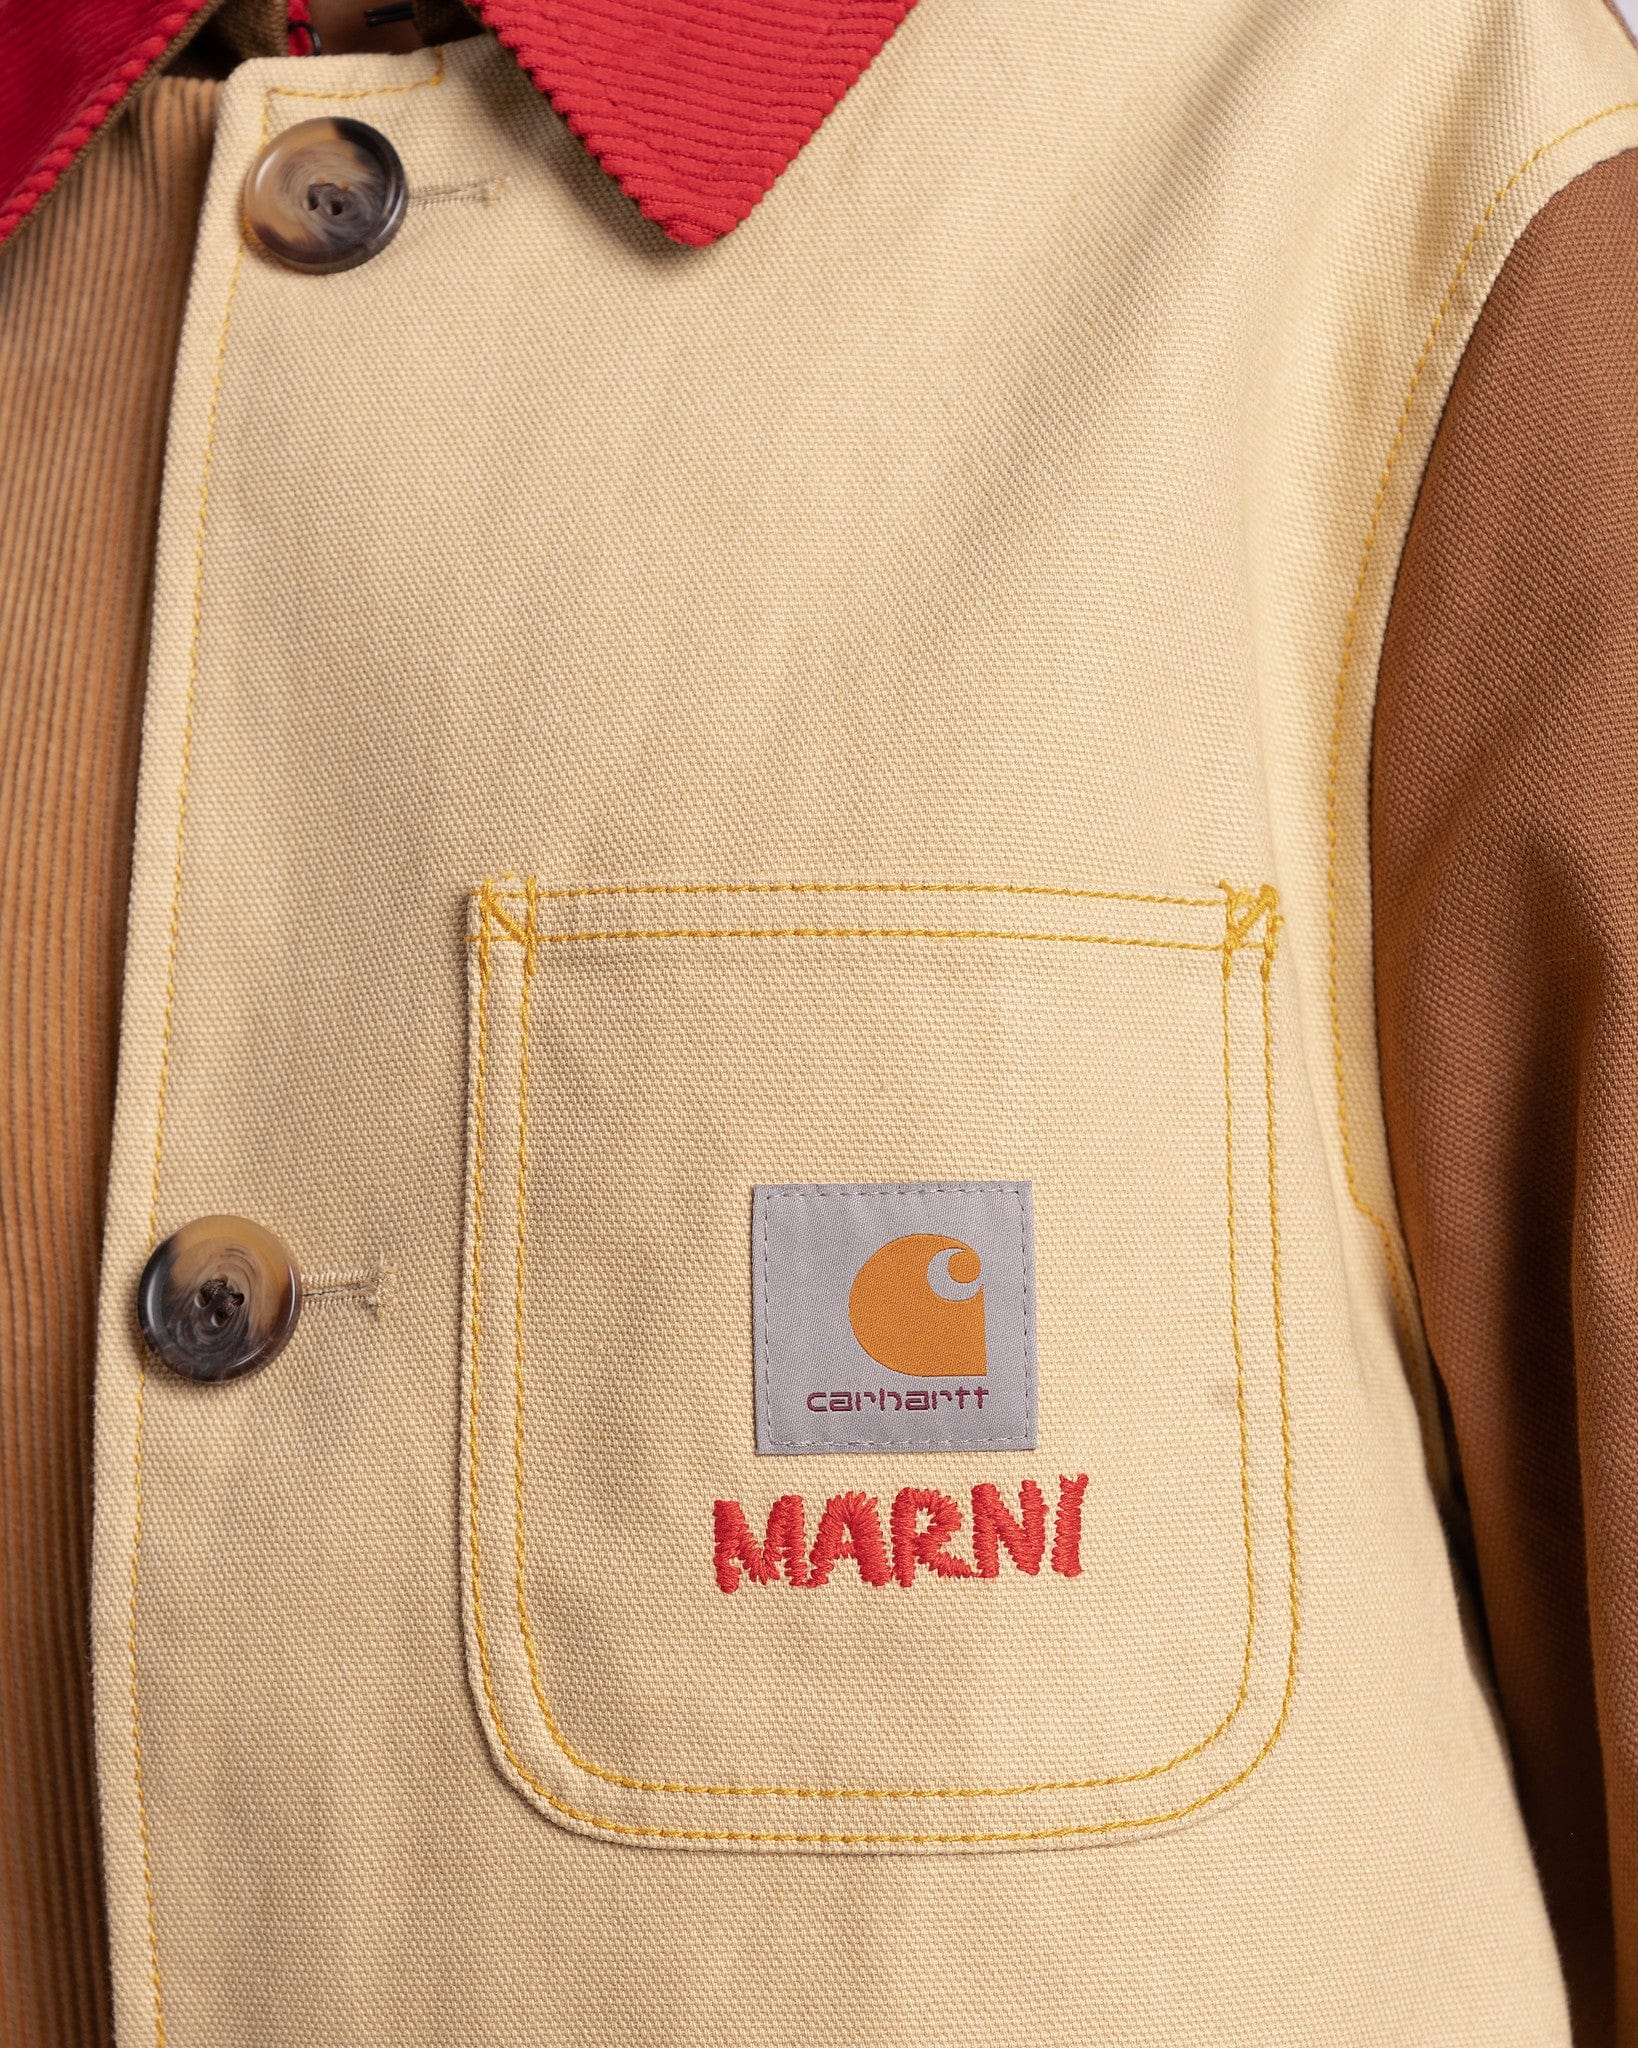 Marni Women Jackets Carhartt Cotton Canvas Coat in Tobacco